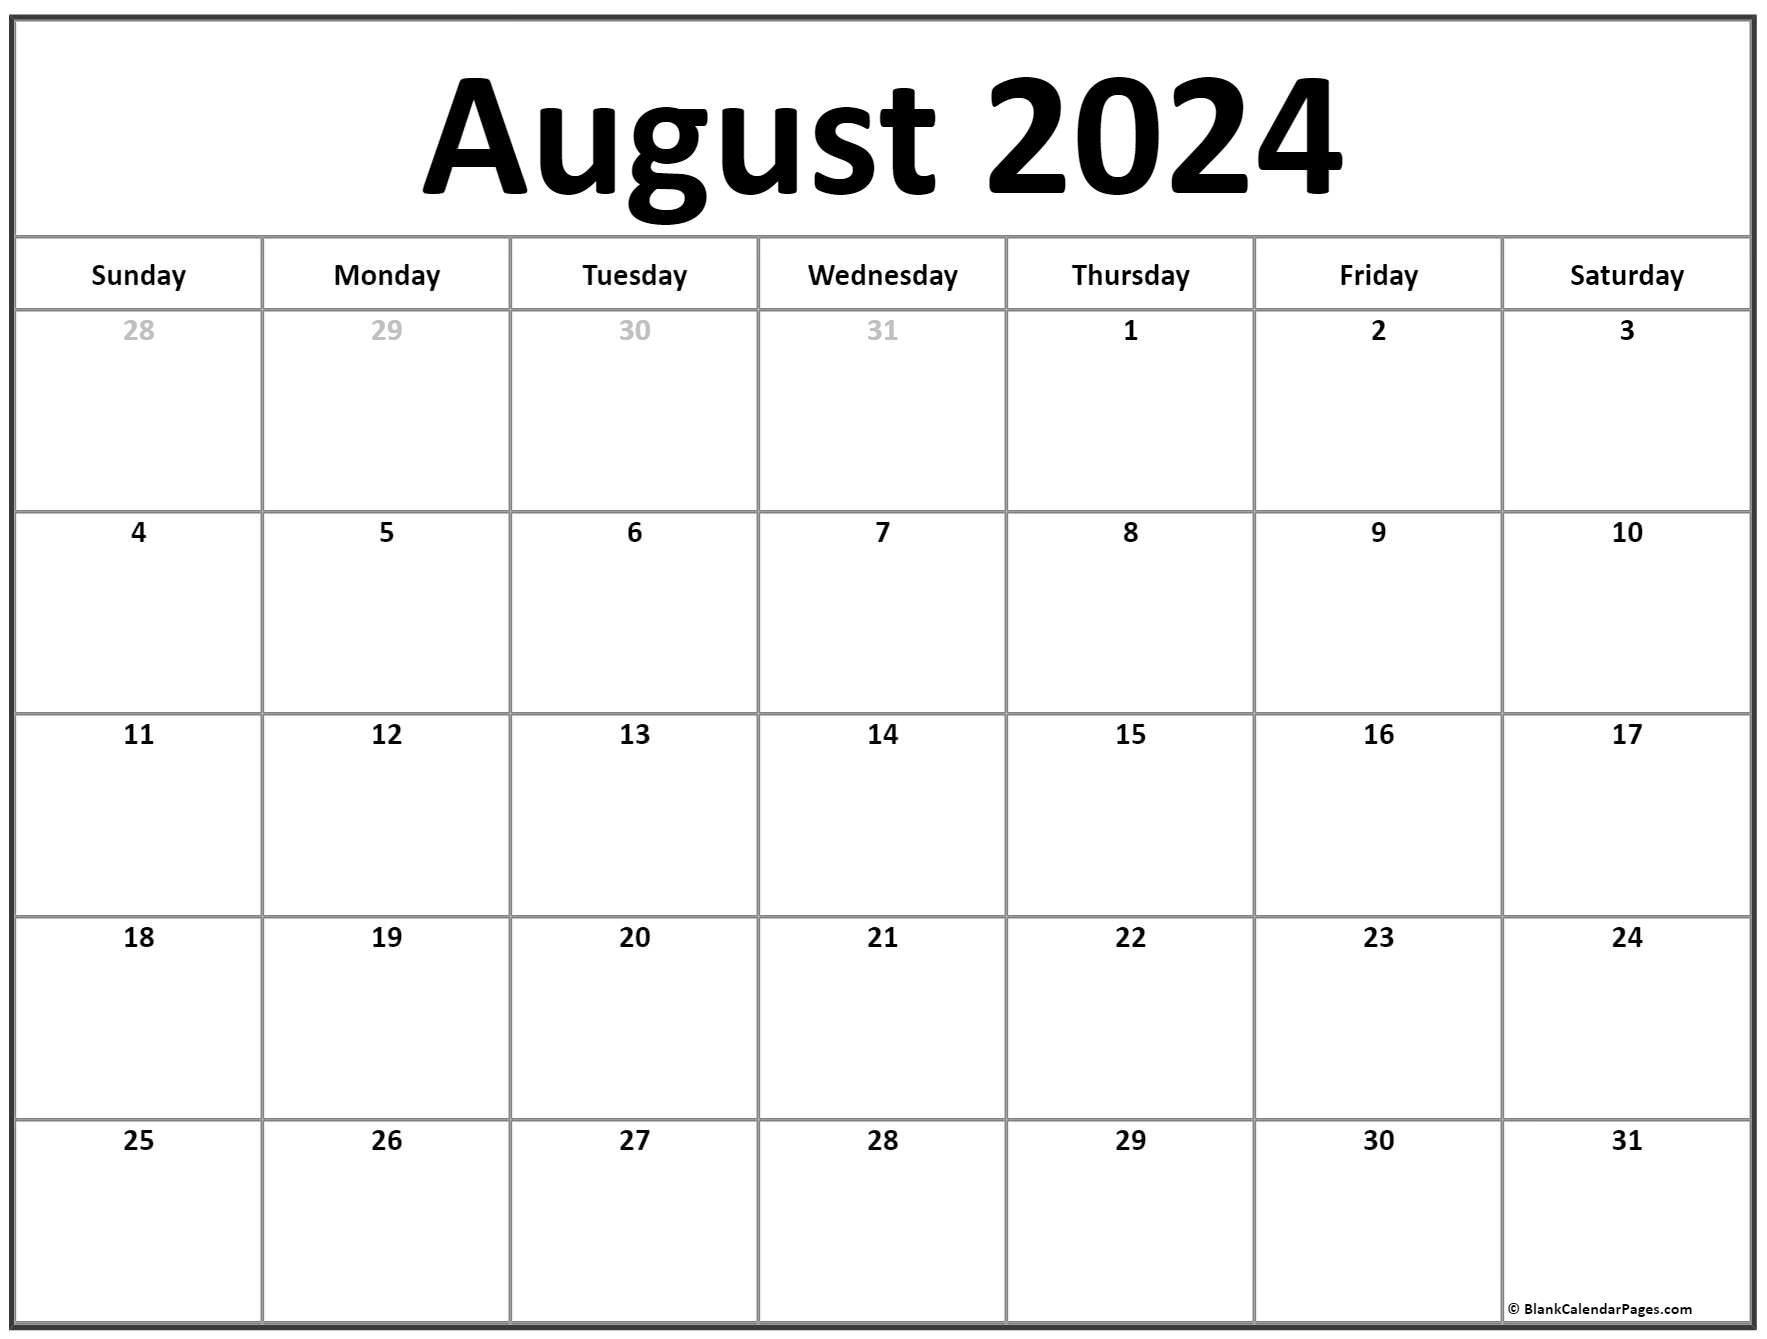 August 2024 calendar | free printable calendar